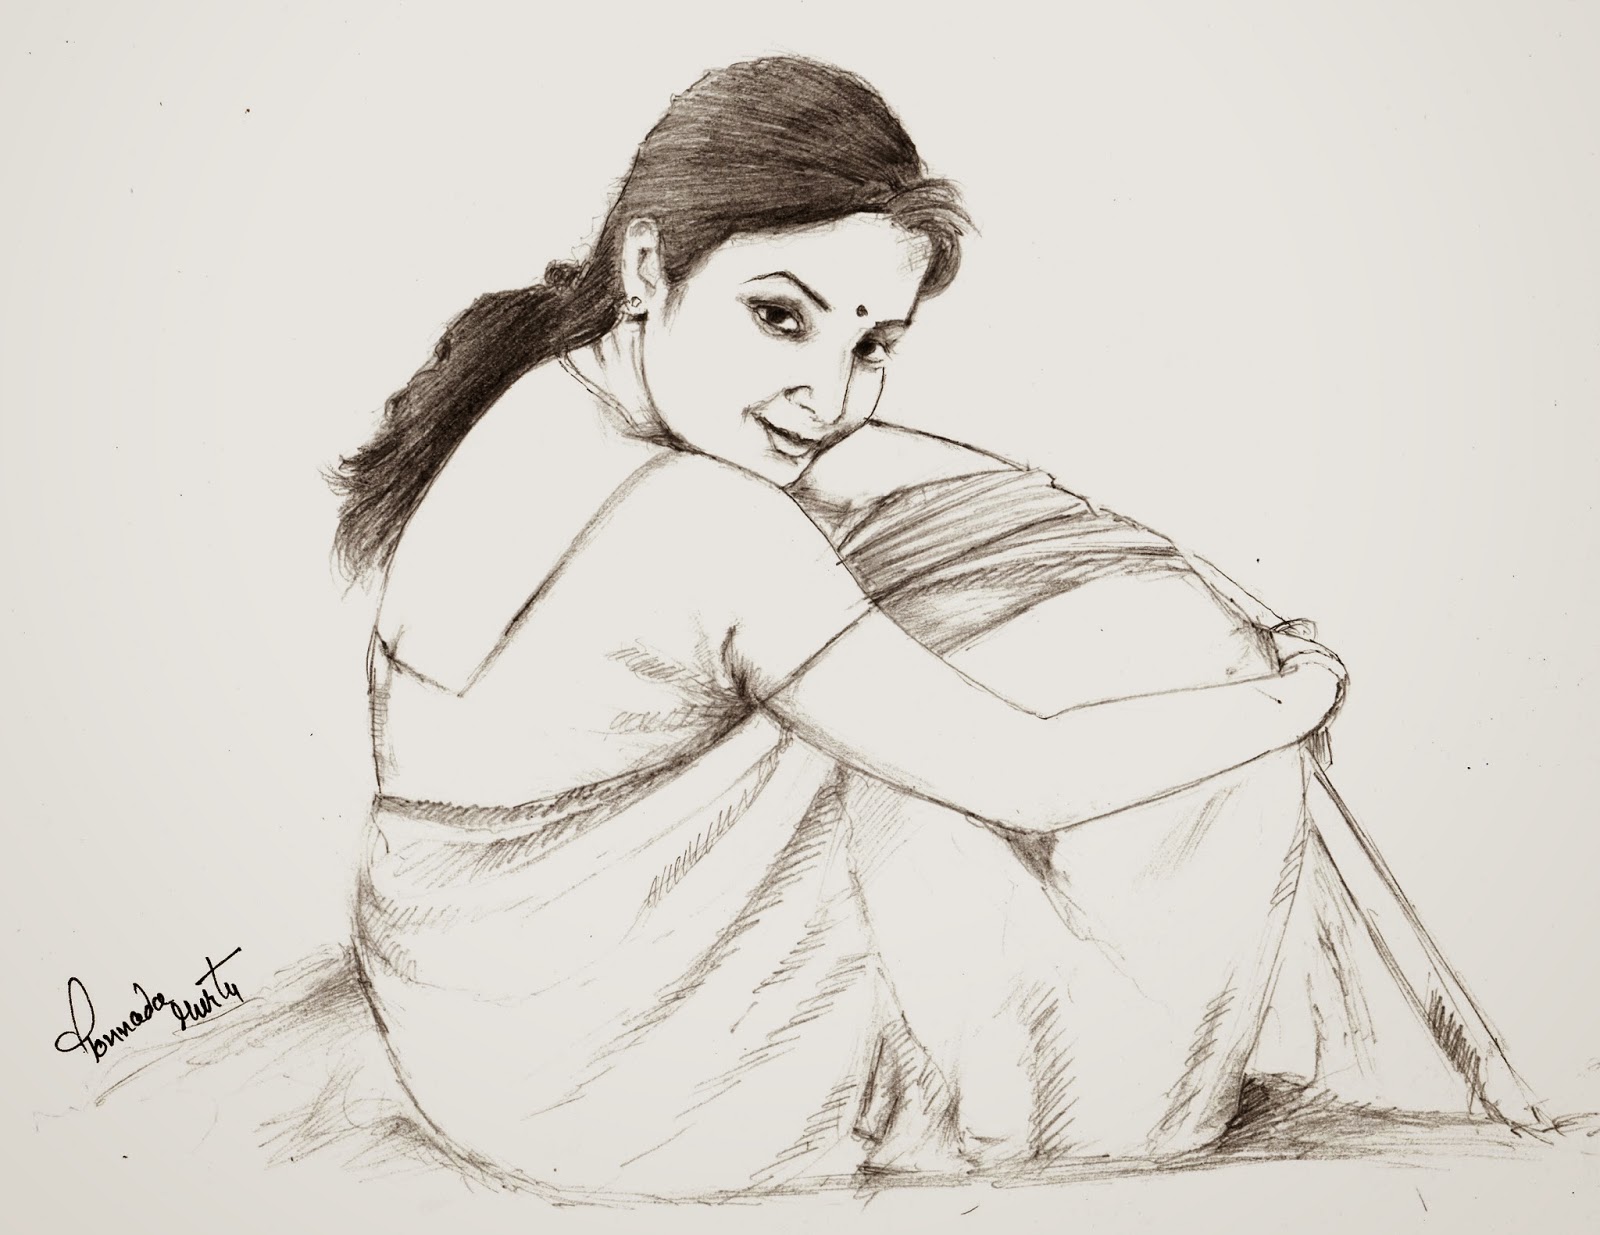  Sketches  and Drawings Telugu girl  pencil drawing 